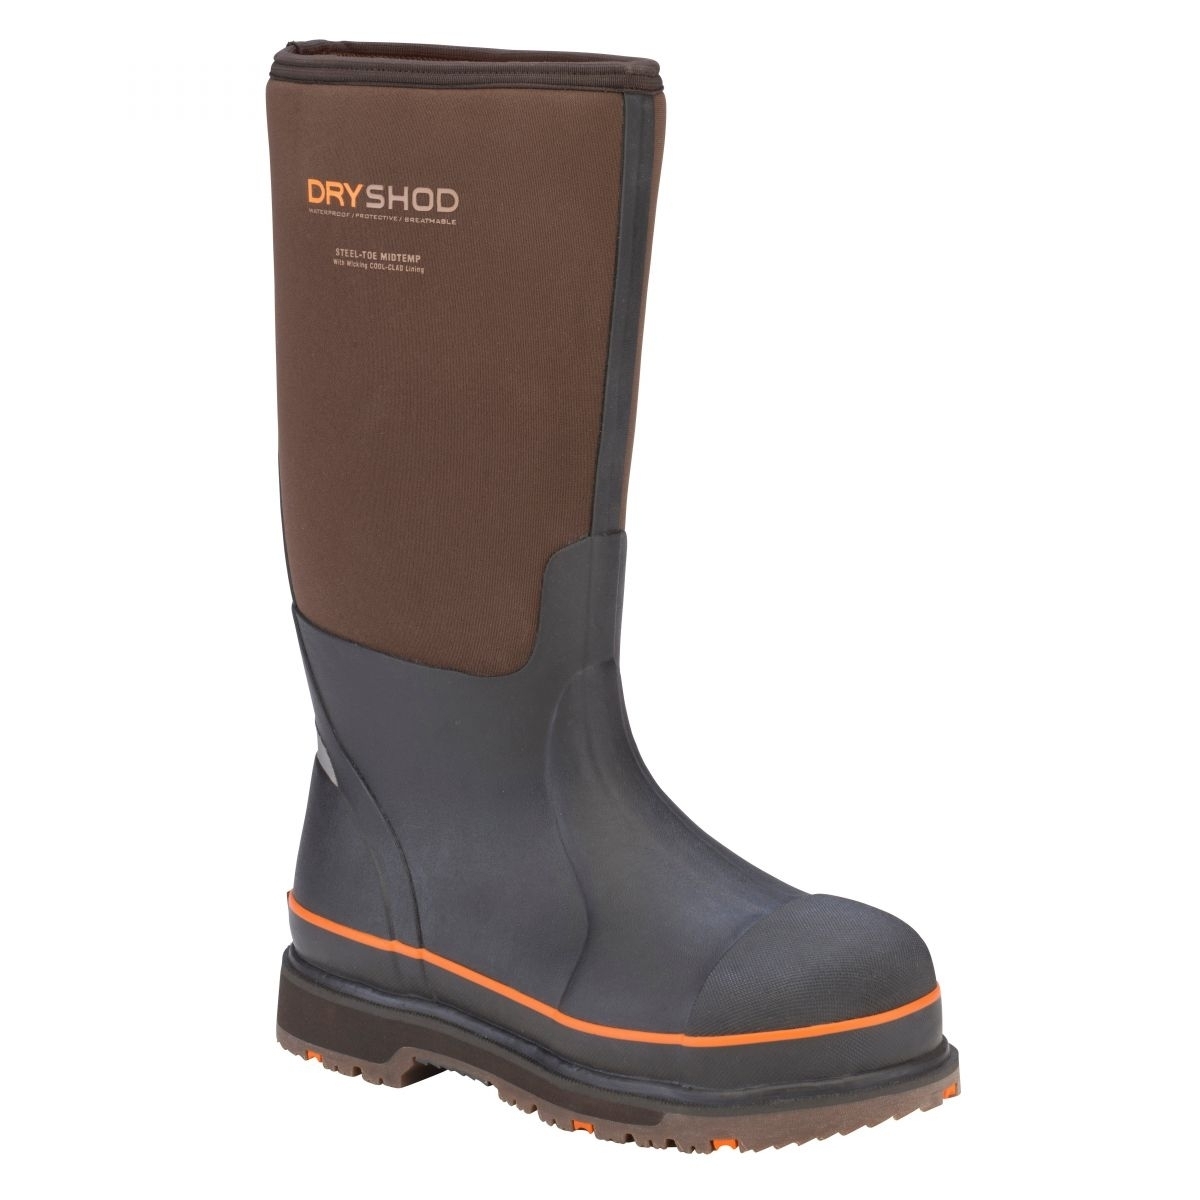 DRYSHOD WORK Men's Steel Toe WIXIT Cool-Cladâ¢ Waterproof Work Boot Brown/Orange - STT-UH-BR ONE SIZE BROWN/ORANGE - BROWN/ORANGE, 8